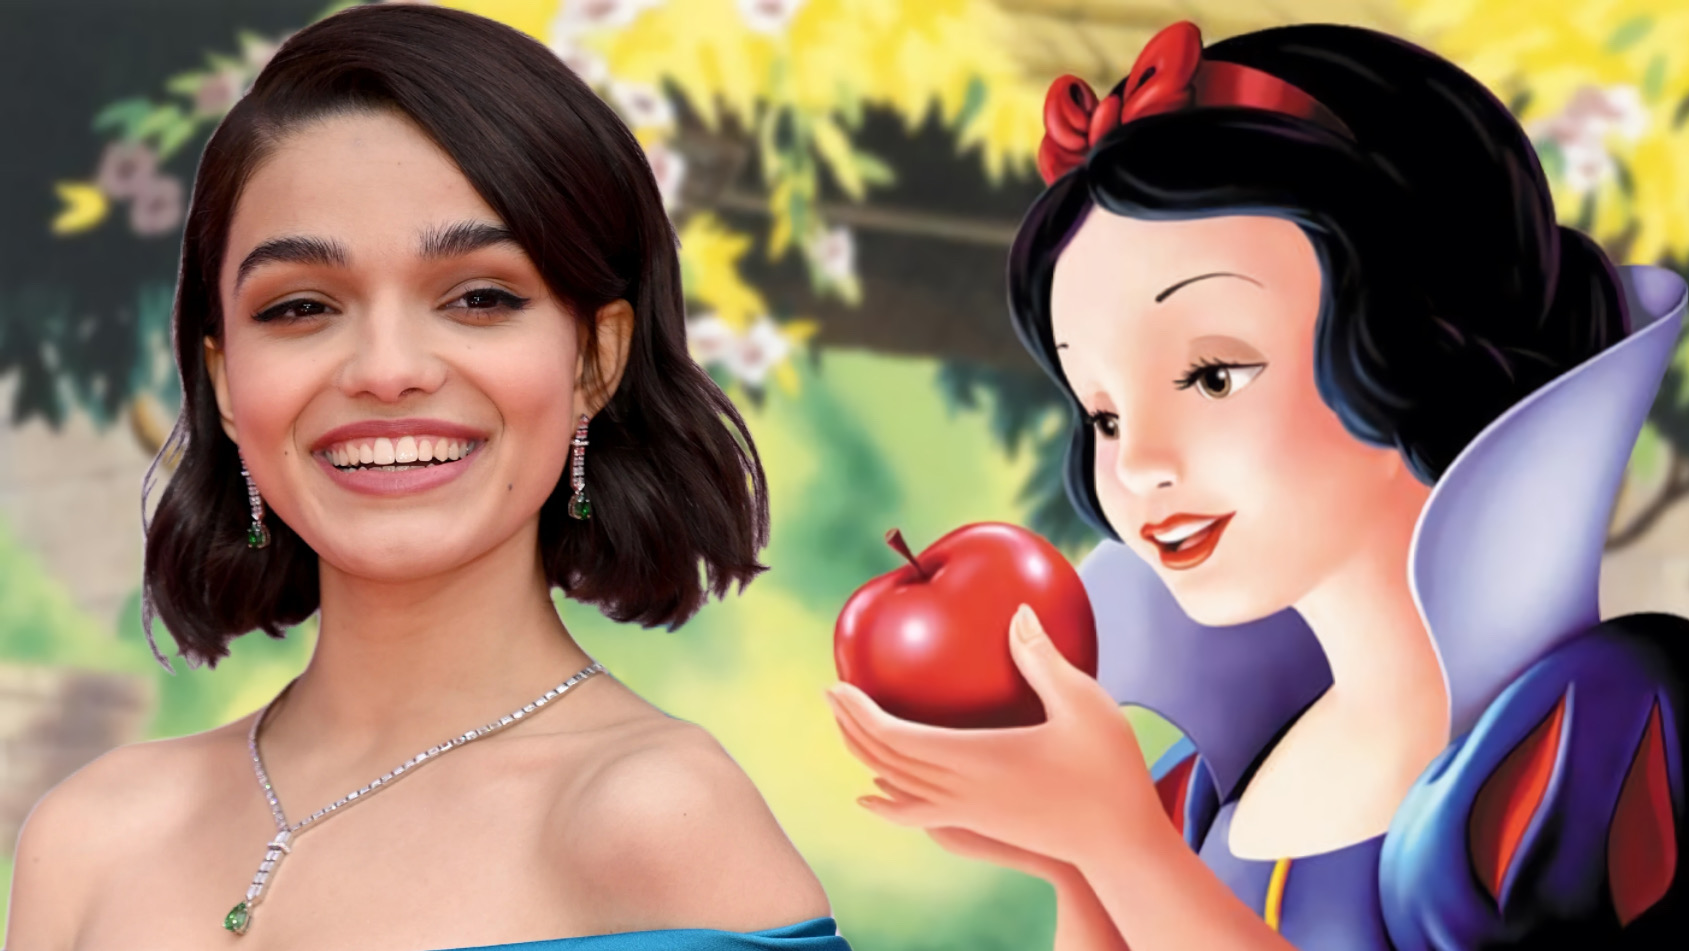 Disney's 'Snow White' Remake Wraps Filming, Dujonna Gift Joins Cast